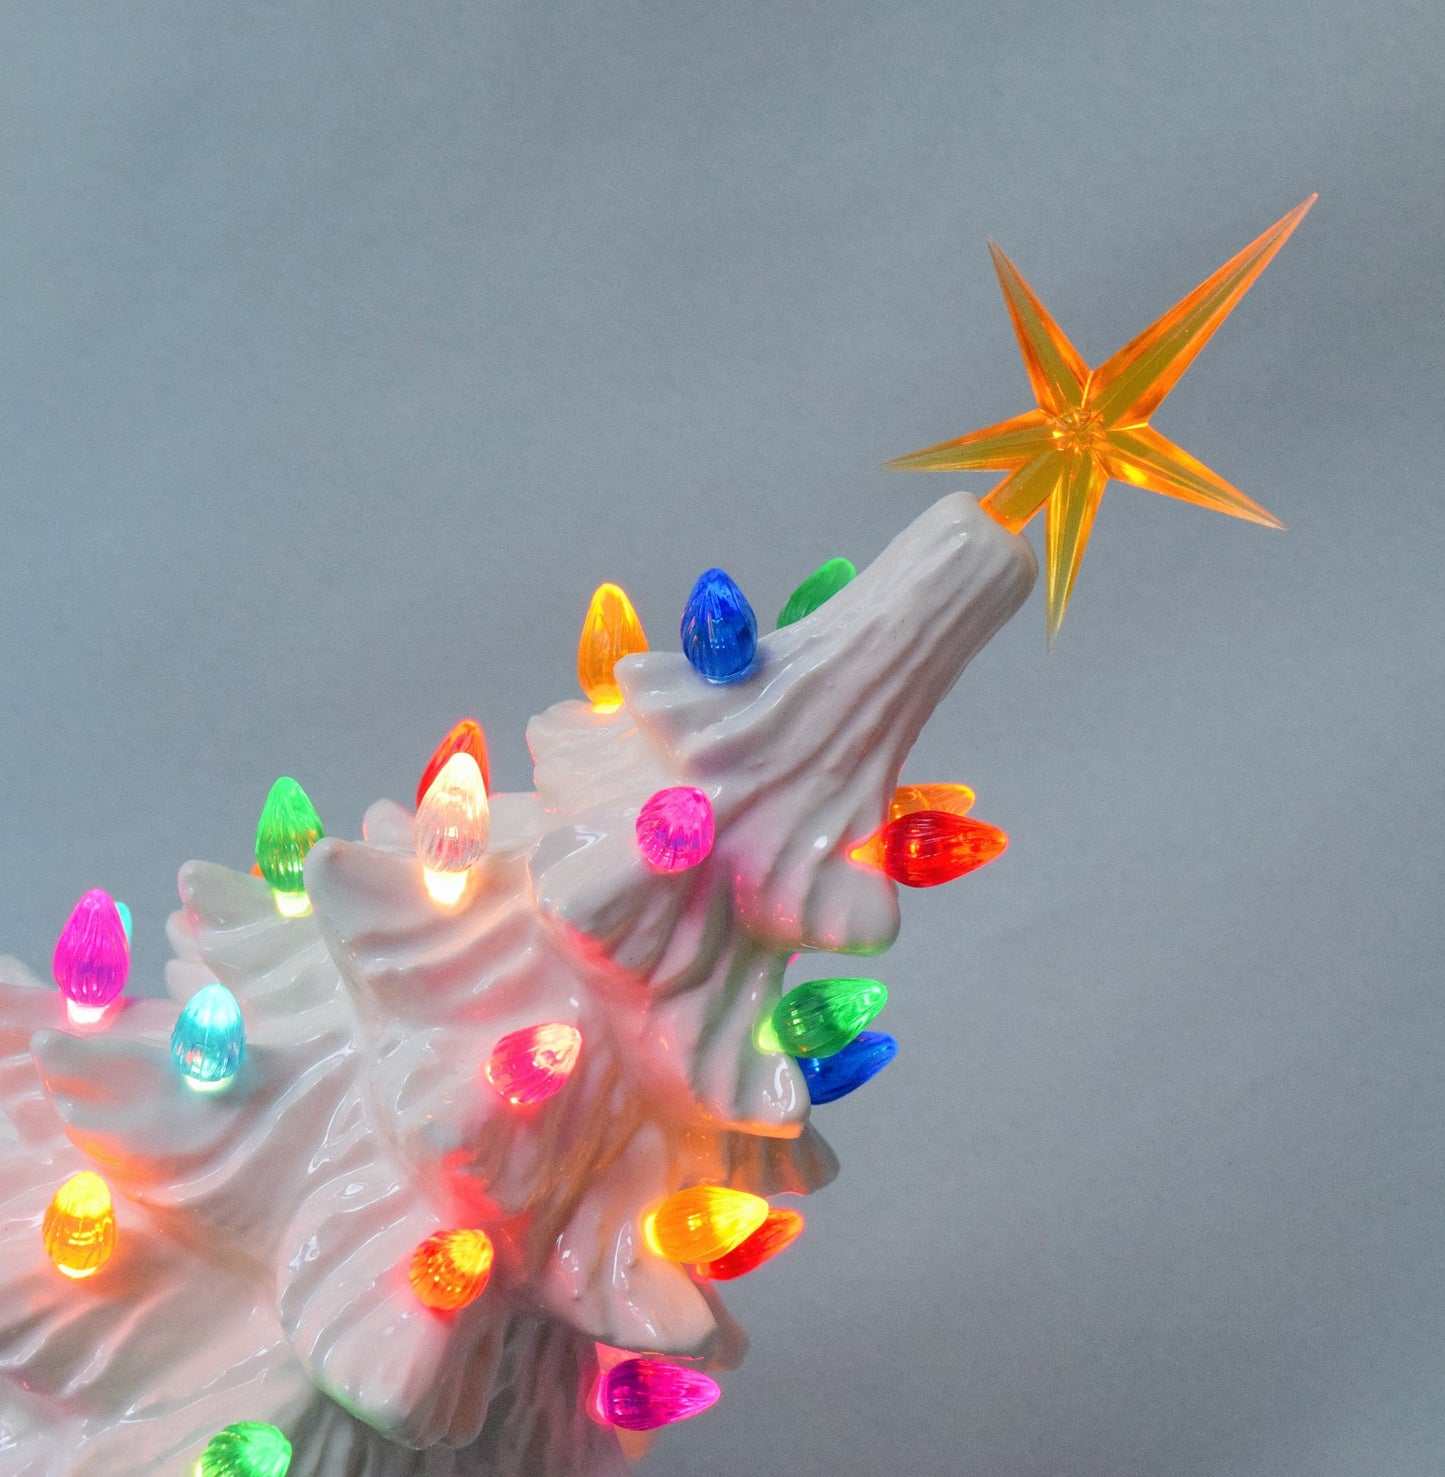 Multicolored White Ceramic Christmas Tree | 11" | Glazed